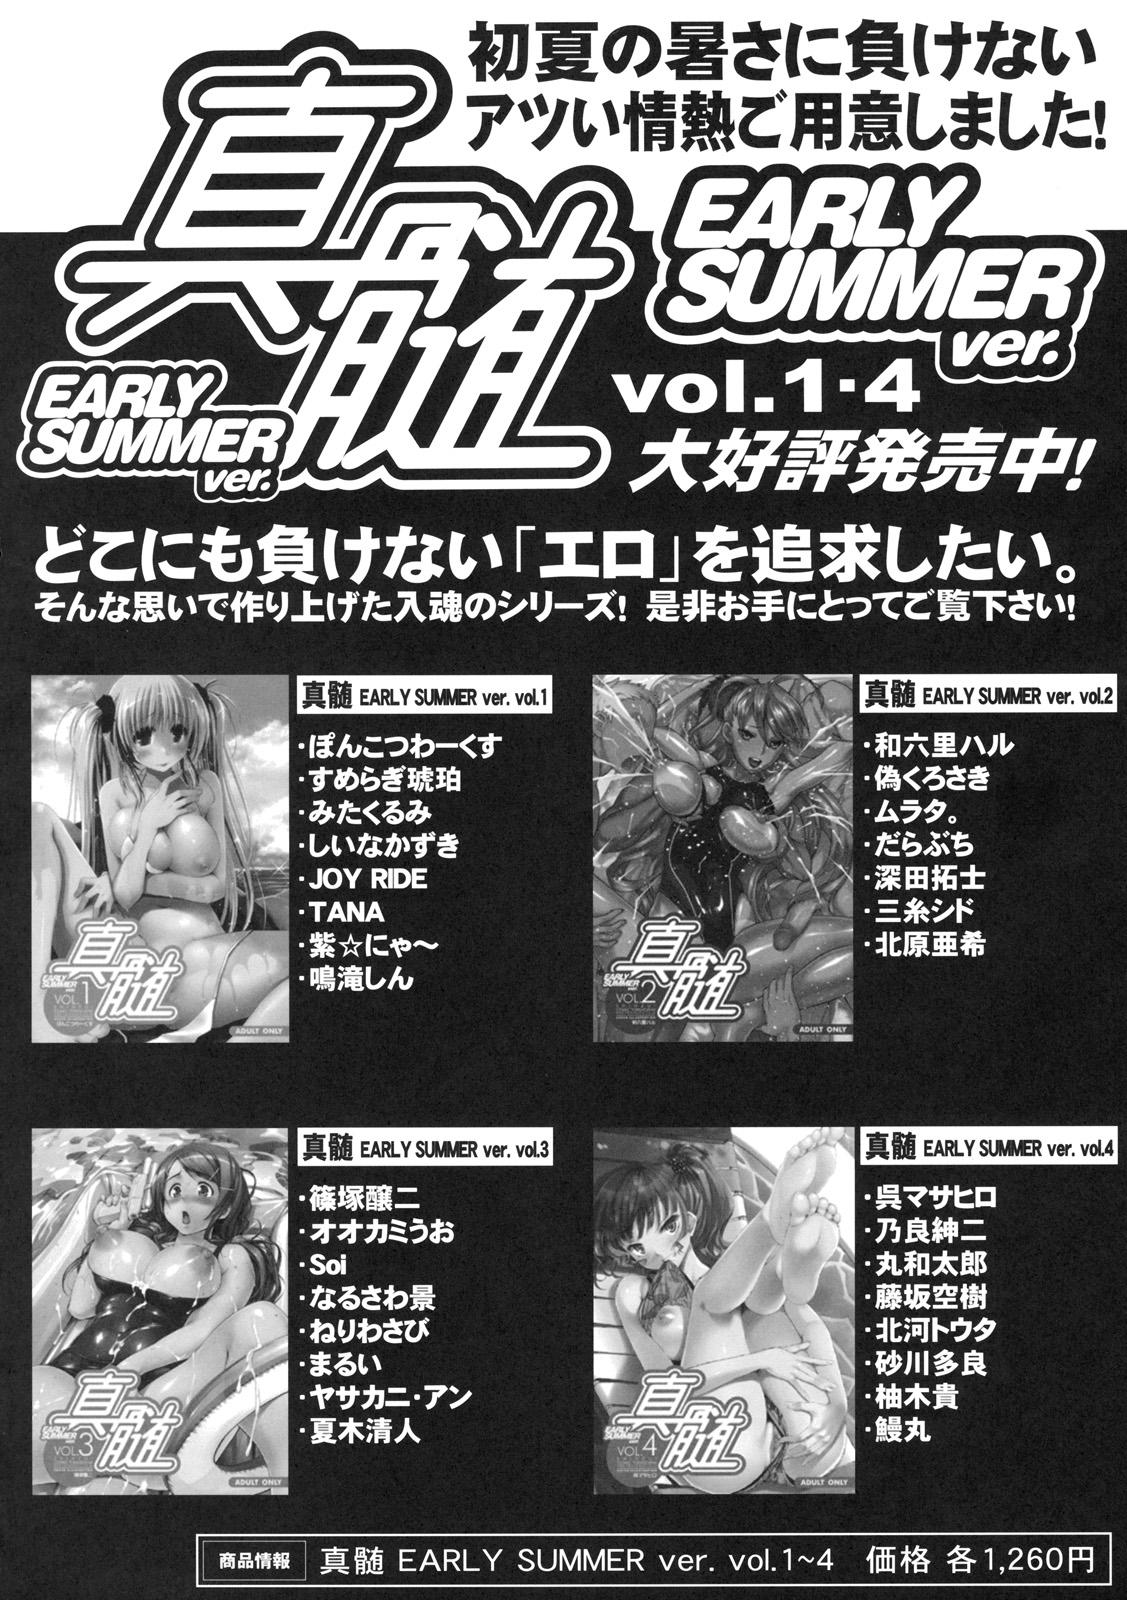 Shinzui LATE SUMMER Ver. 84